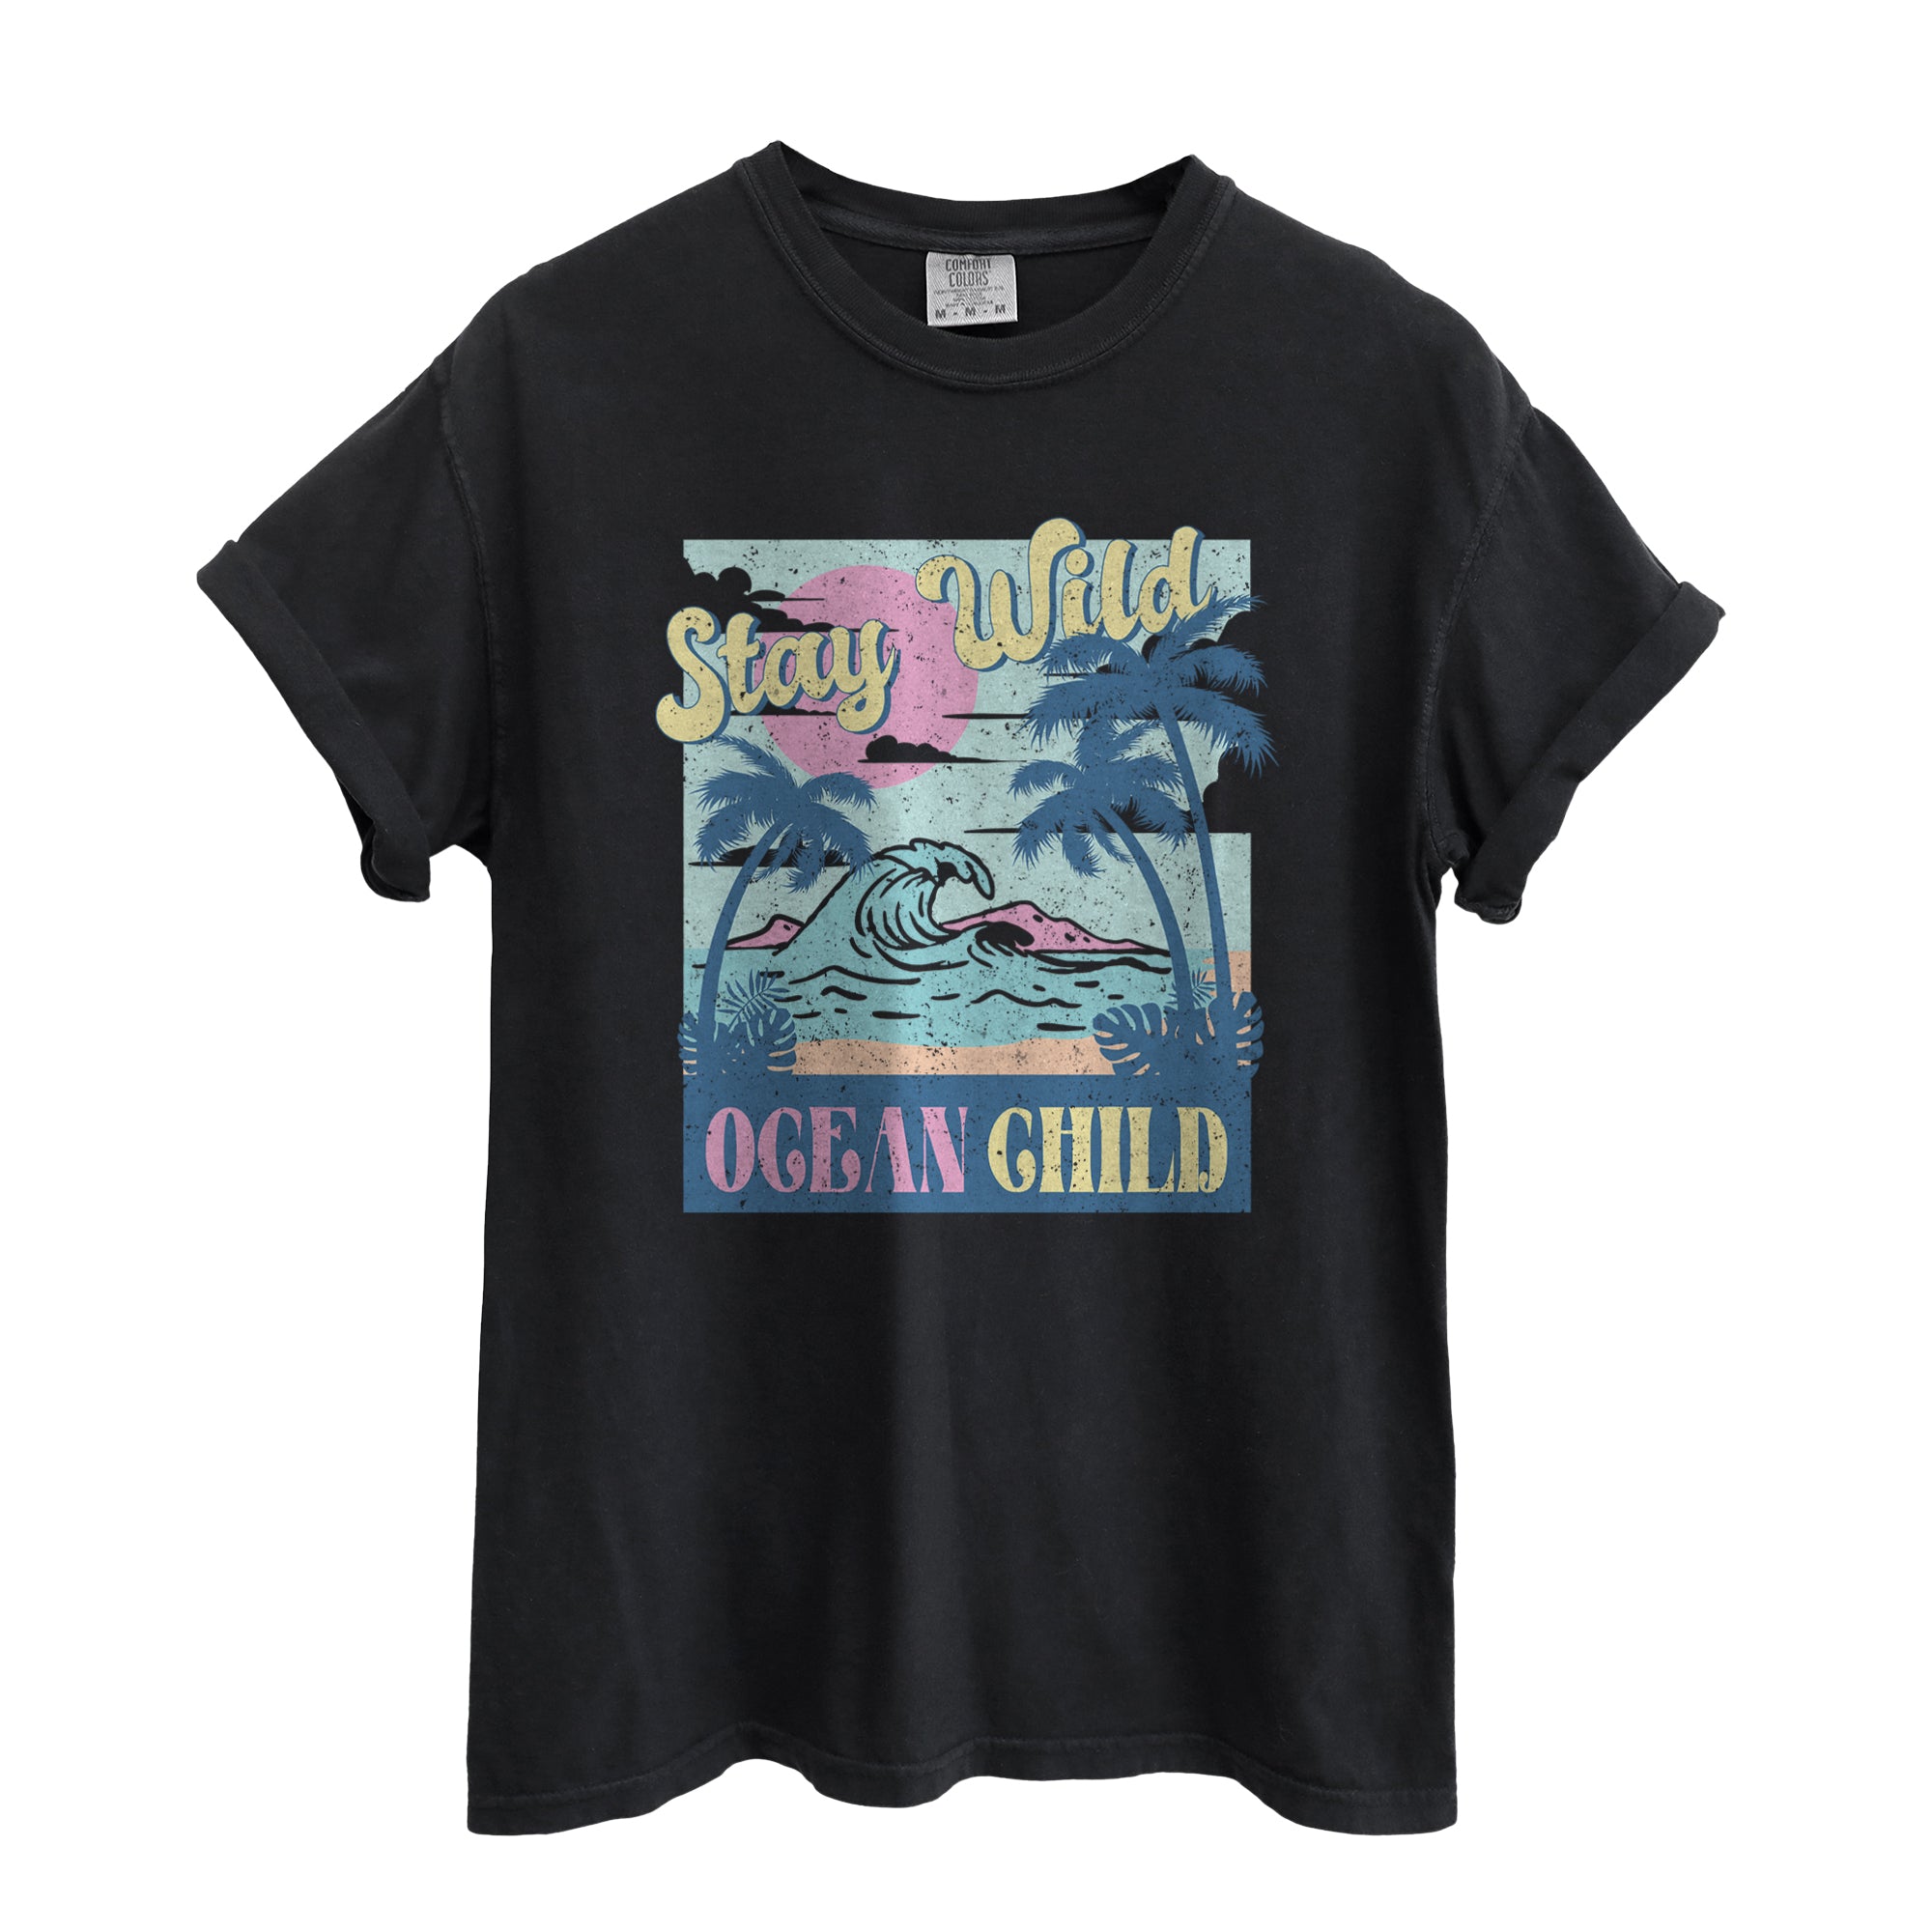 Ocean Child Oversized Shirt for Women Garment-Dyed Graphic Tee